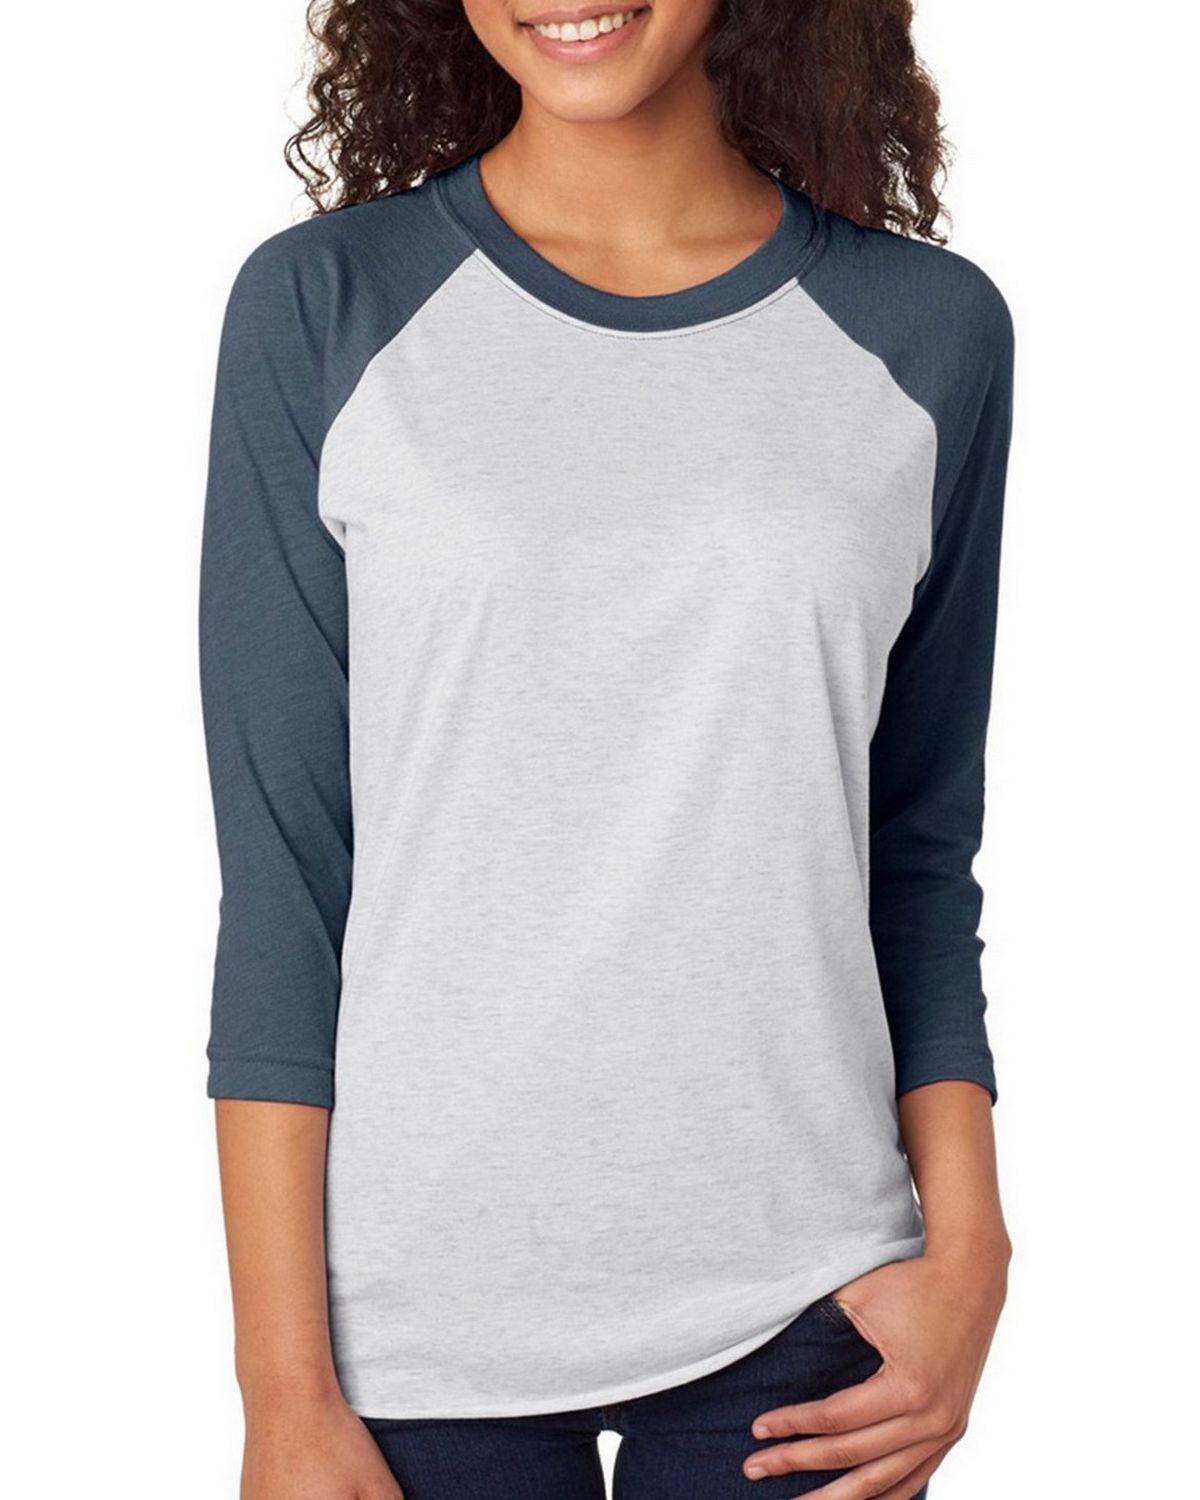 Custom Baseball Tee - Unisex Champion Raglan Baseball T-Shirt | Personalized White/Black Tops from Customized Girl